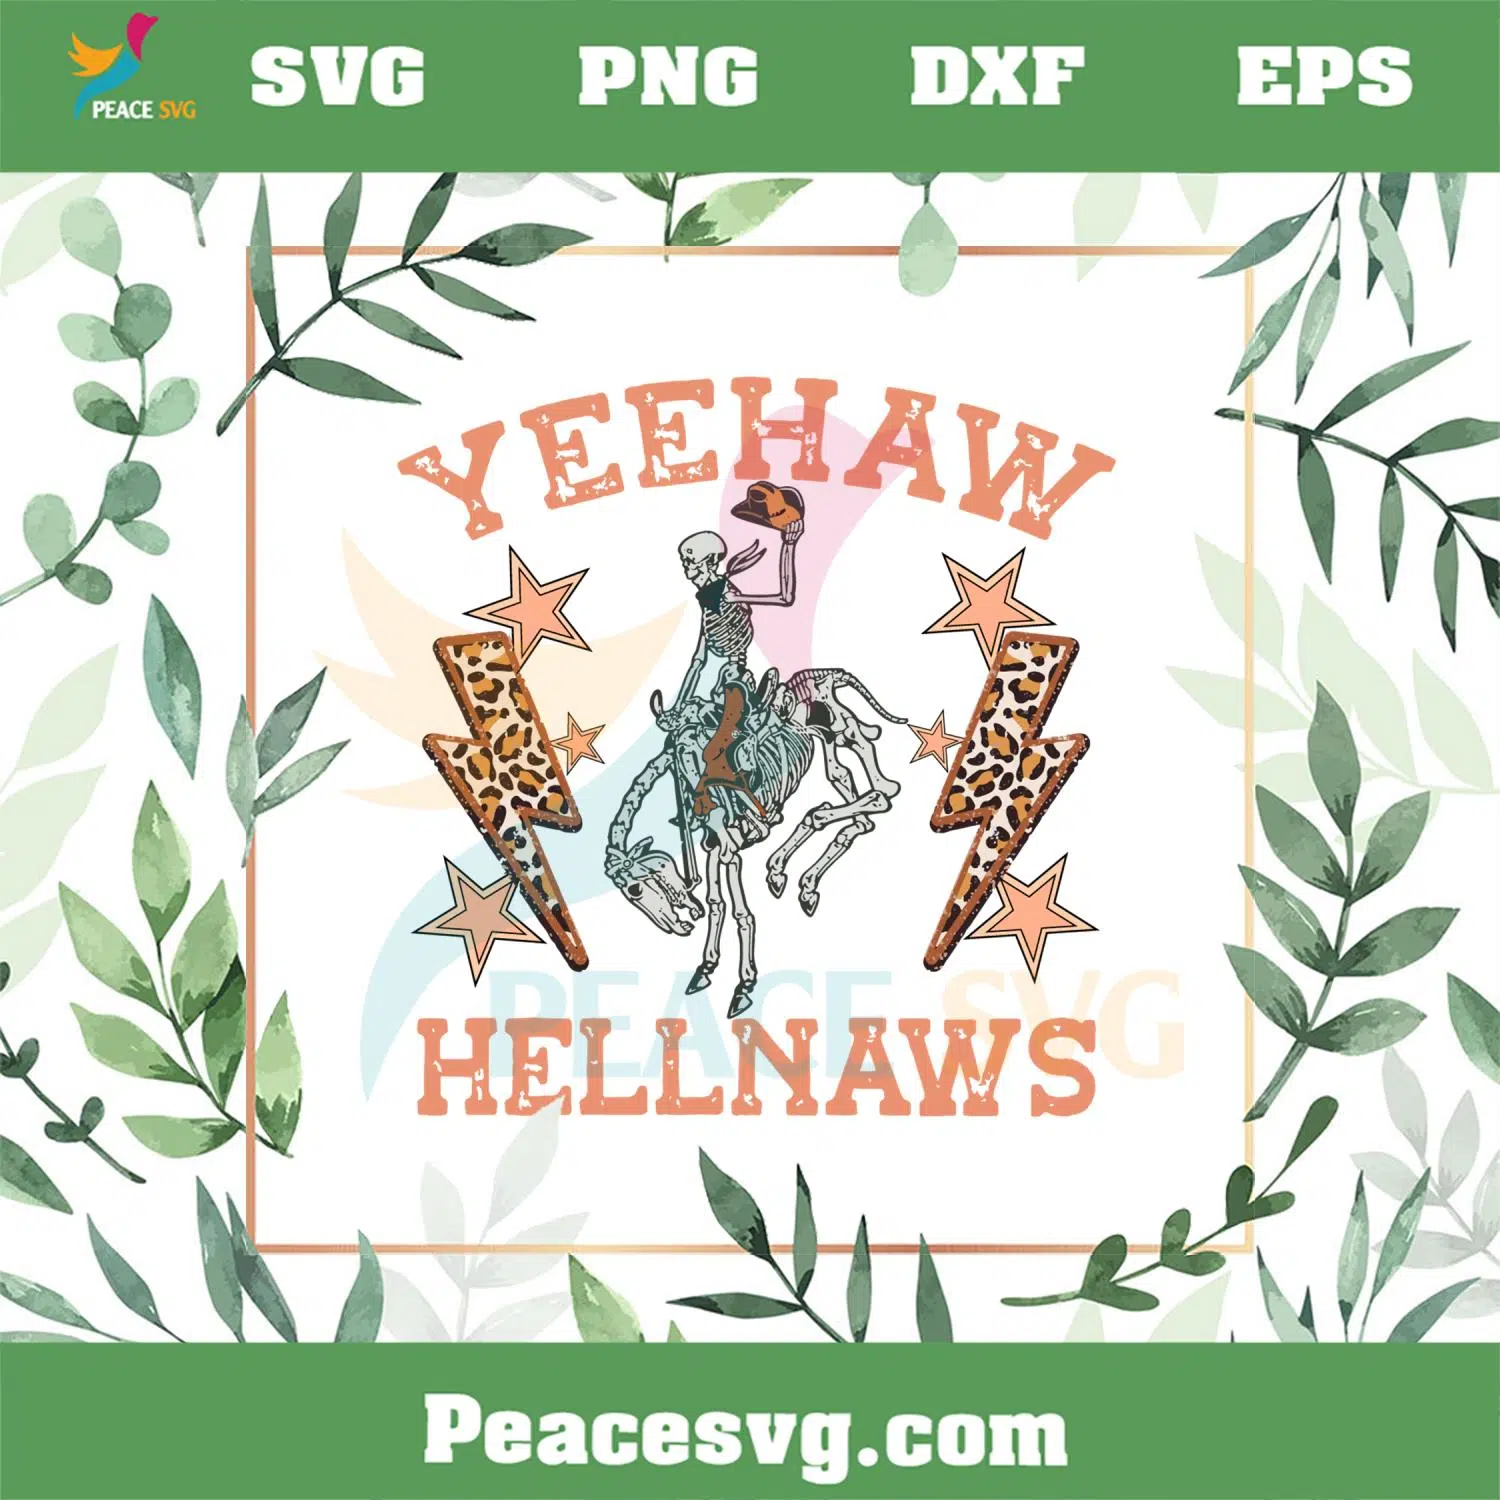 Yeehaw Hellnaws Western Skeleton Cowboy Riding SVG Cutting Files